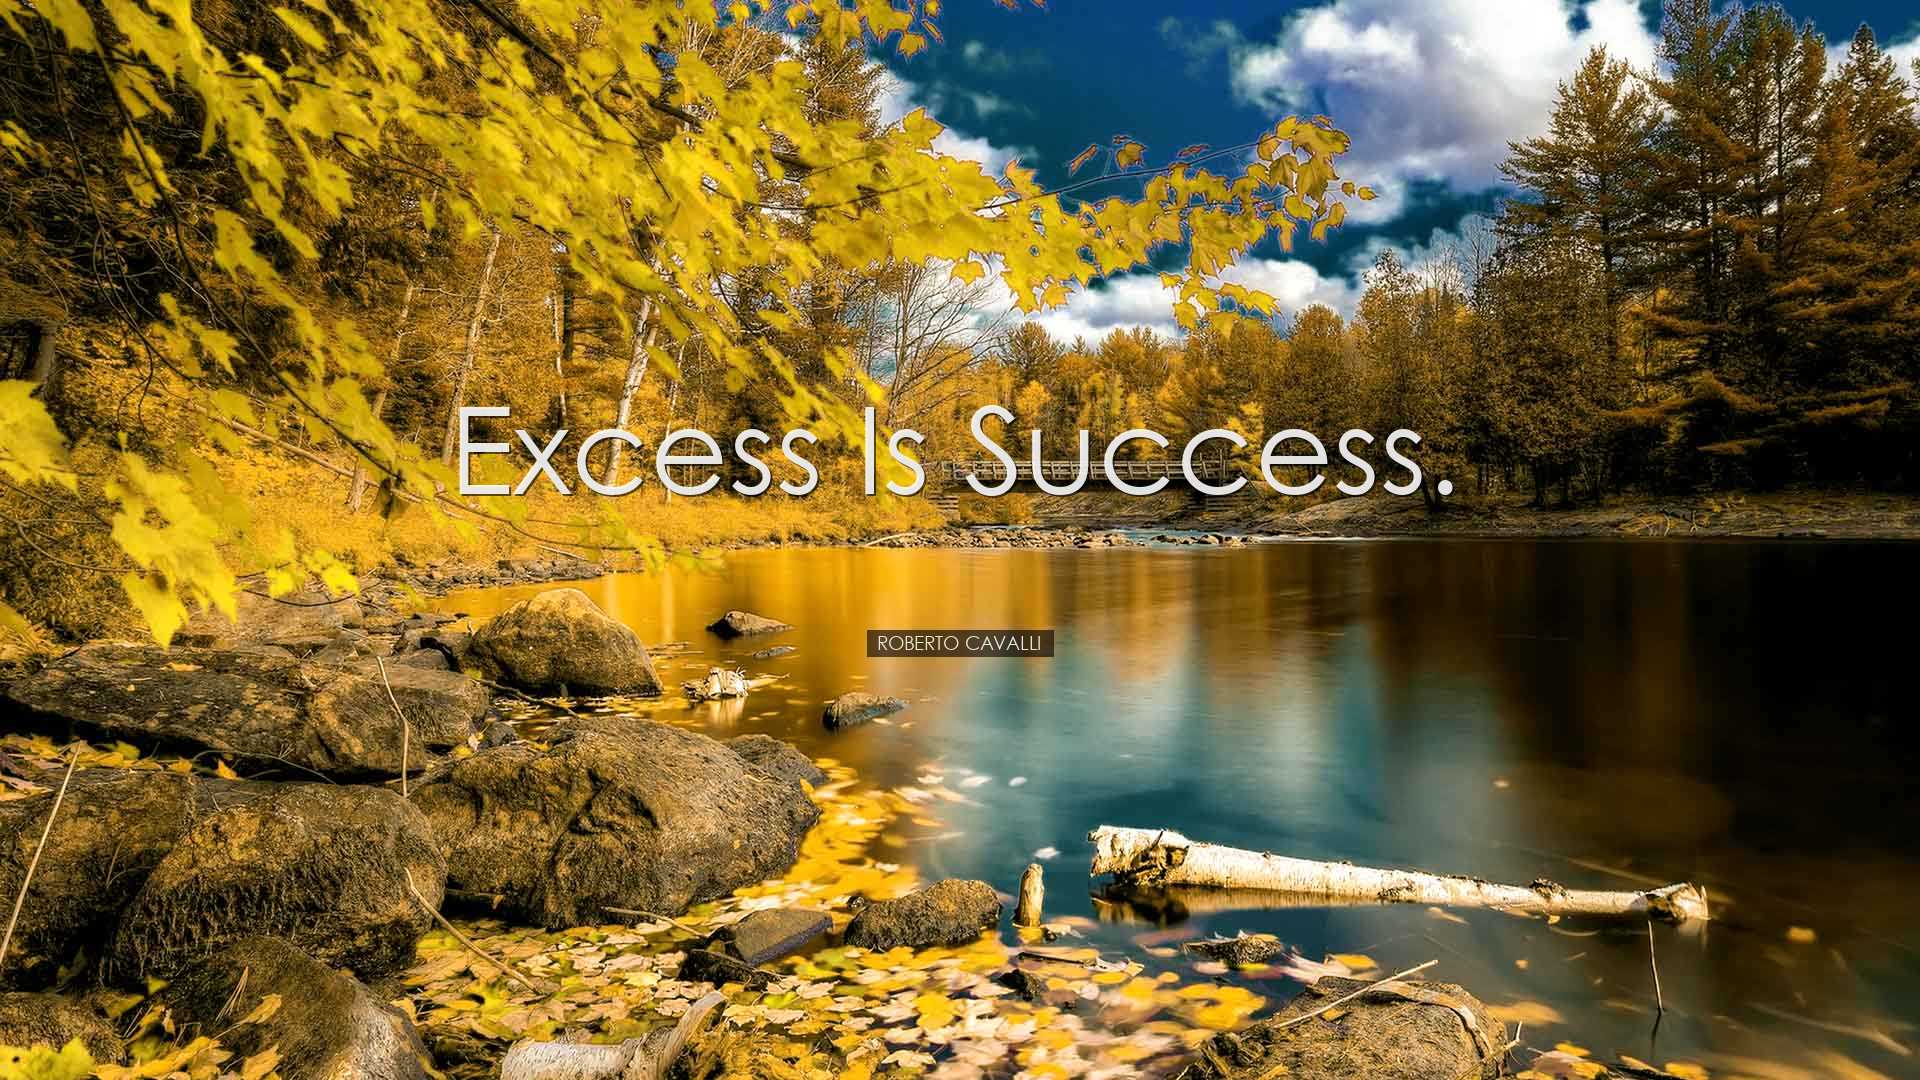 Excess is success. - Roberto Cavalli